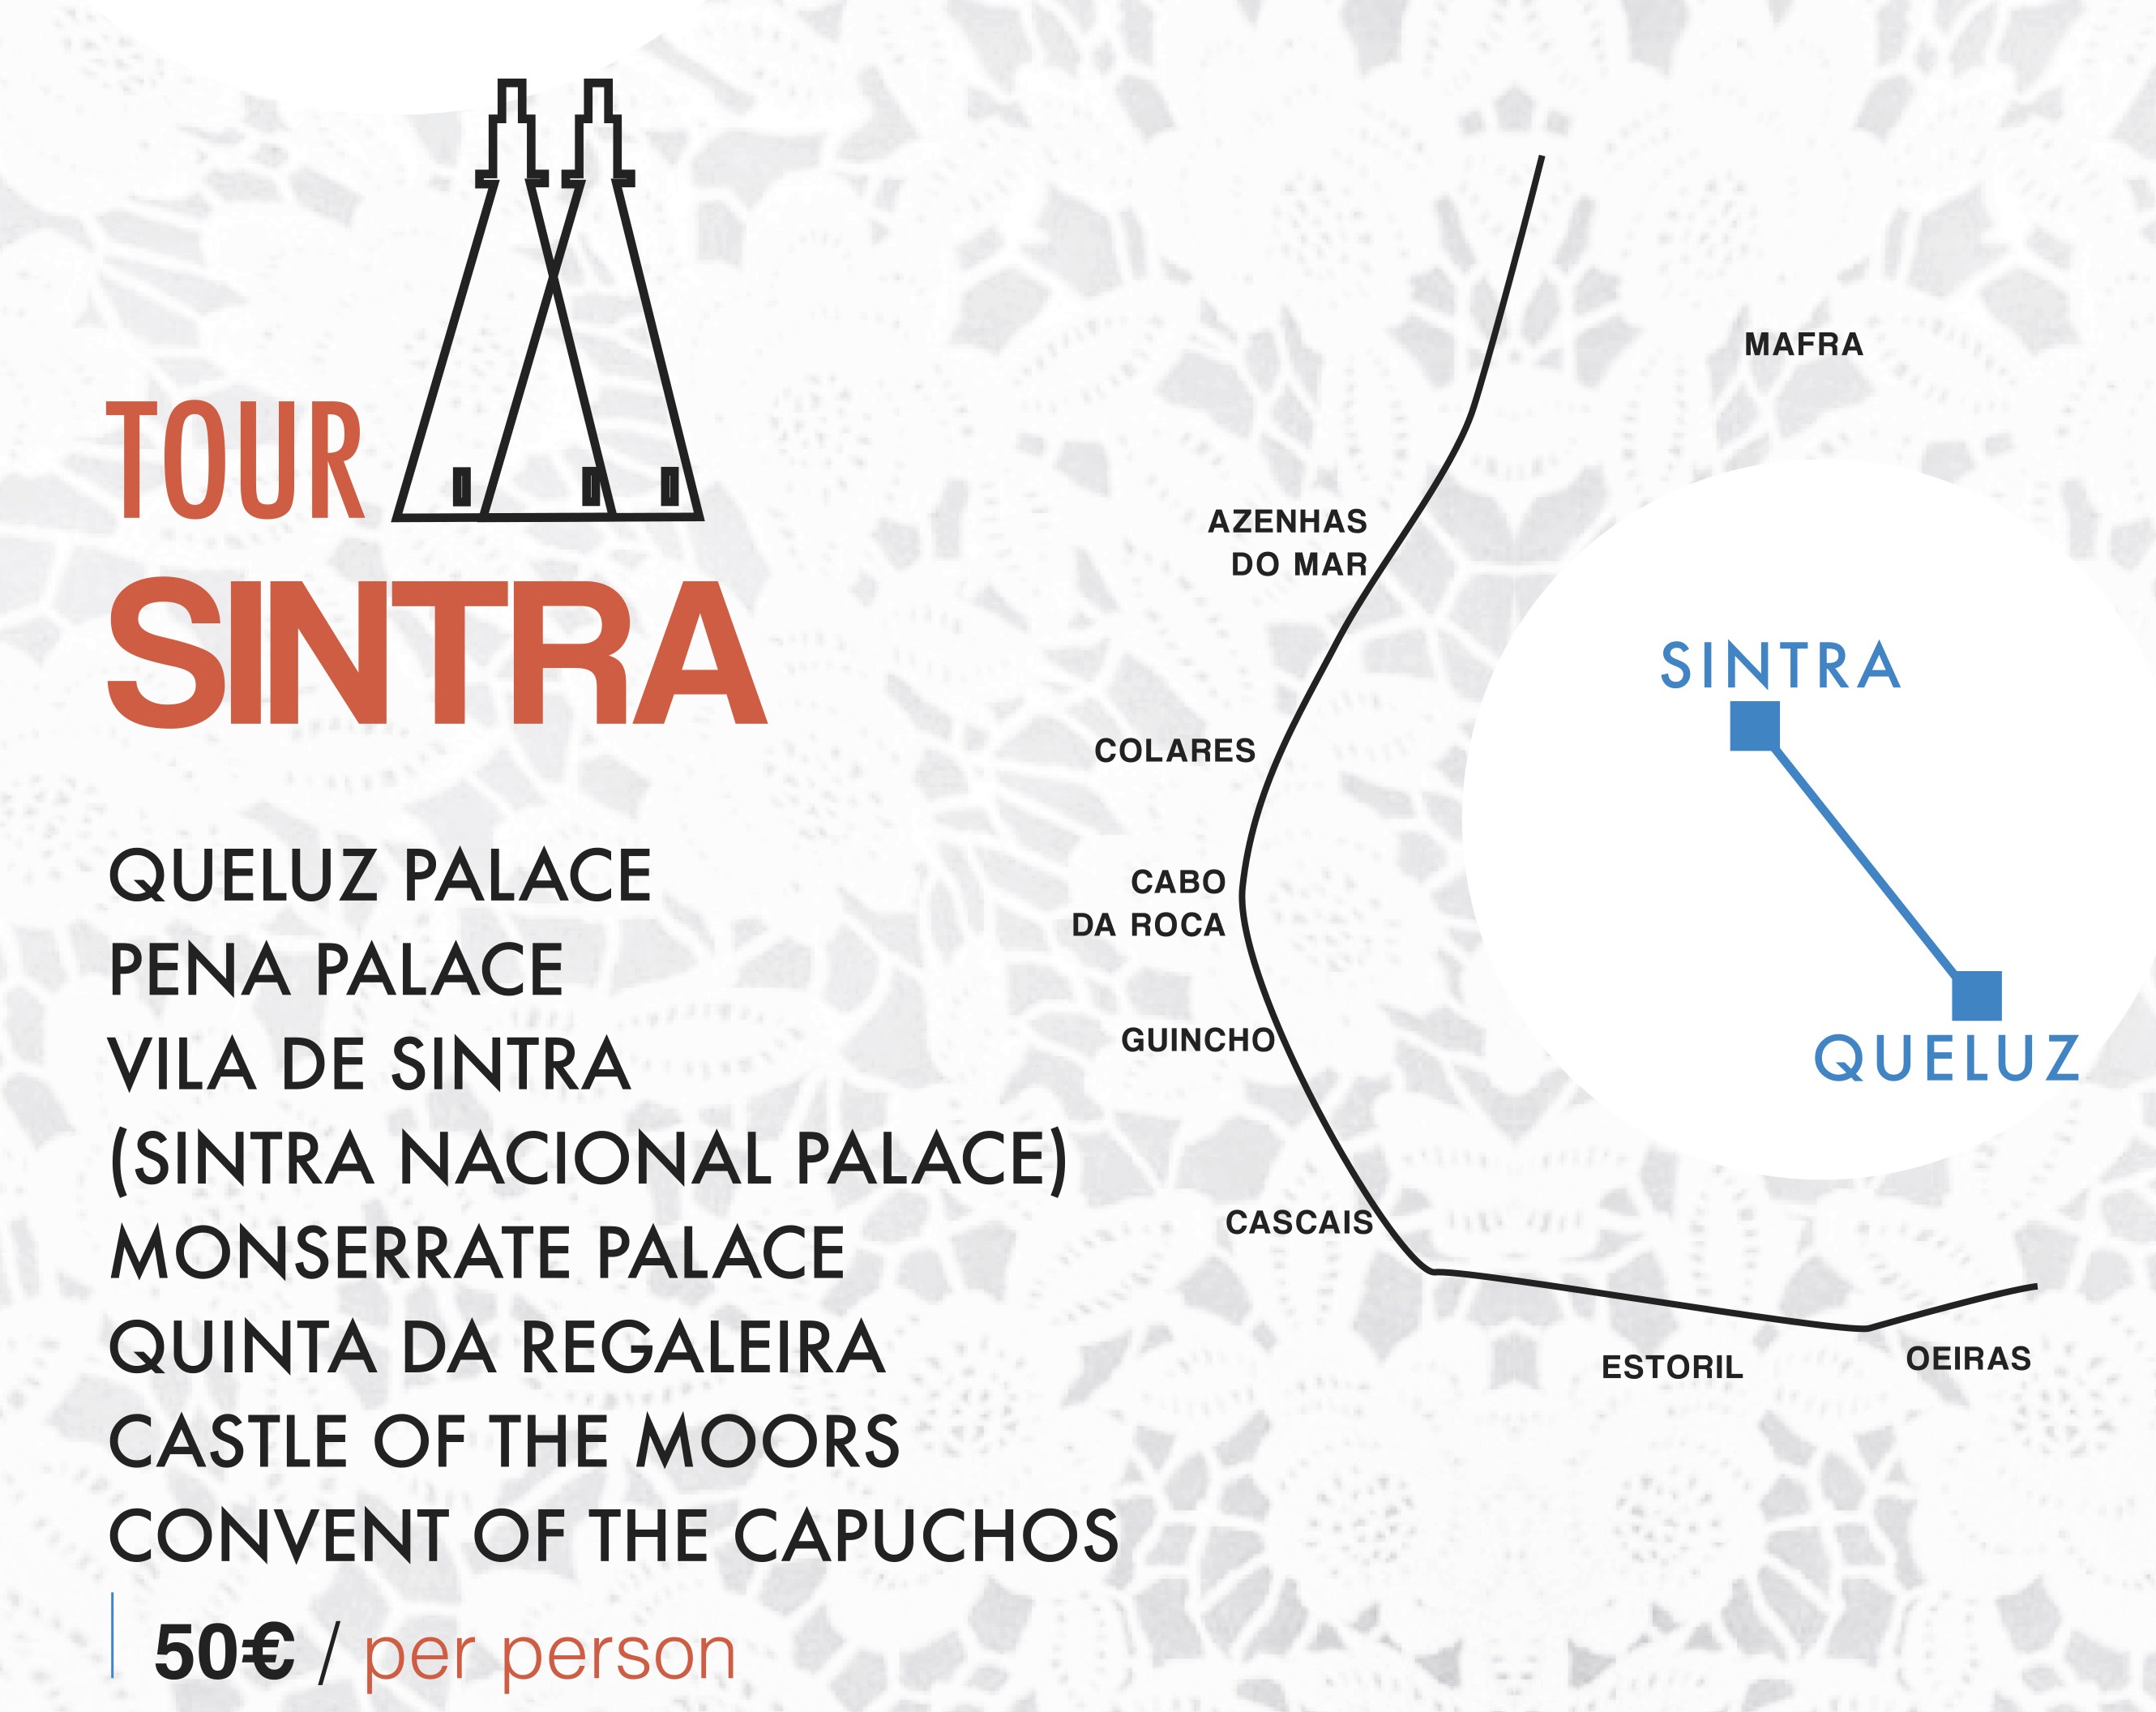 tour sintra wedding in portugal